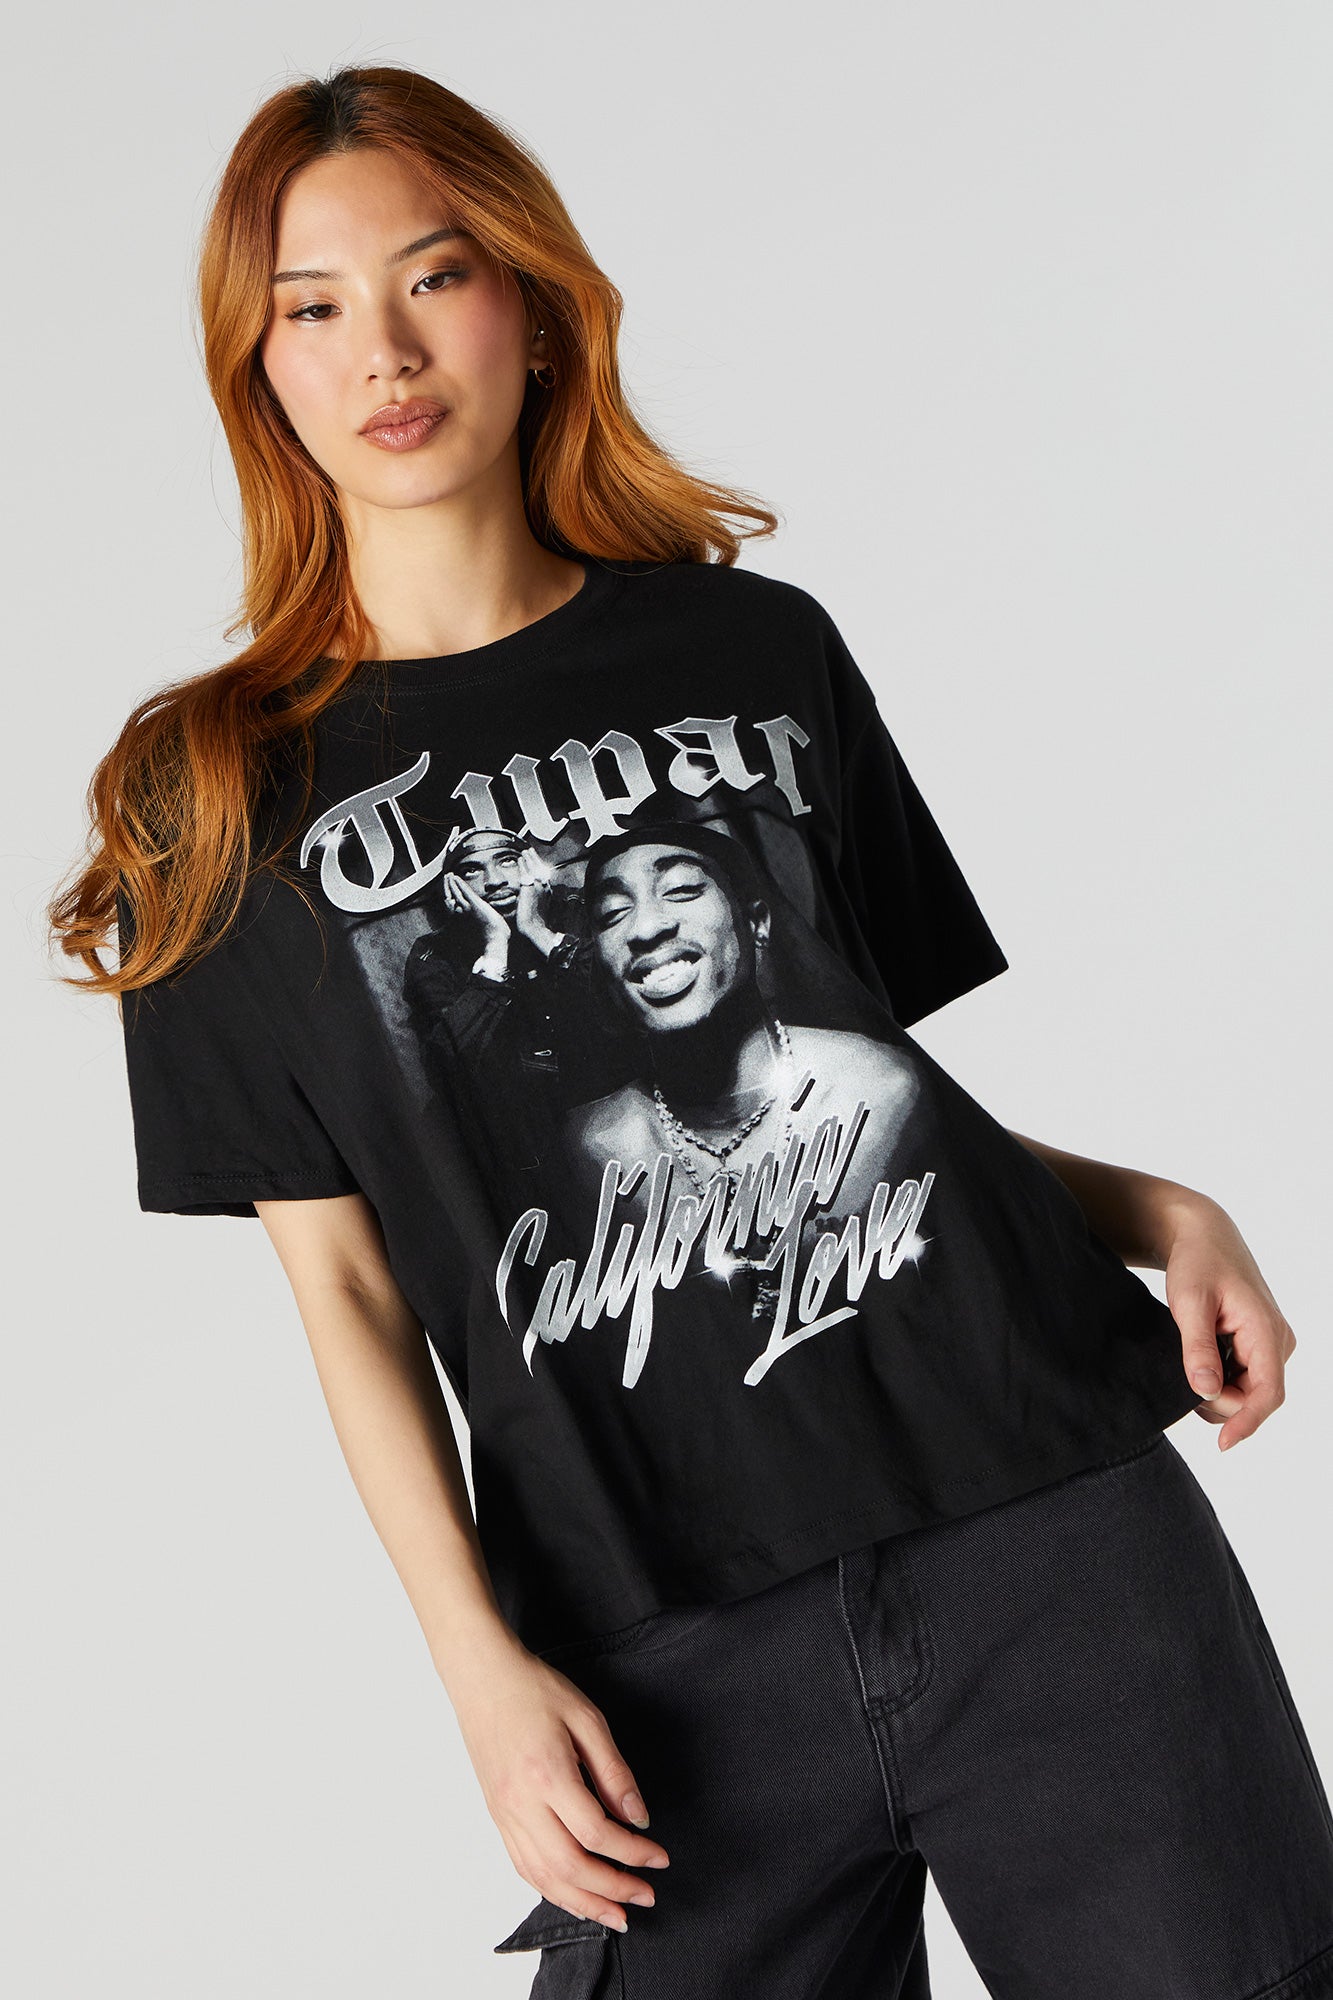 Tupac California Love Graphic Boyfriend T-Shirt